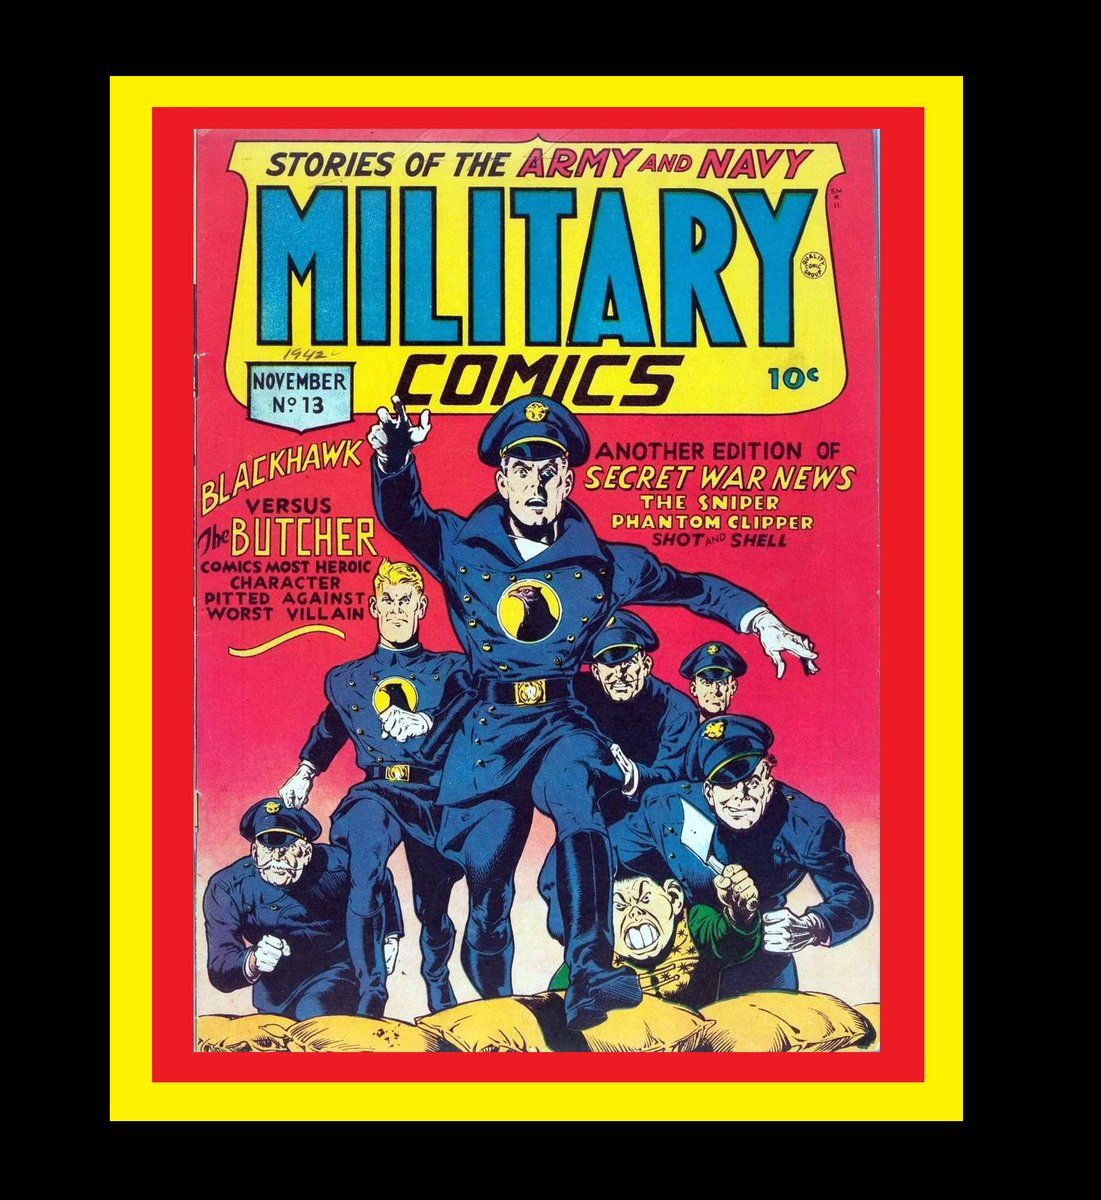 #Blackhawk-#GoldenAgeComics-#hero Blackhawk. #OTD remembering birthday of Reed Leonard Crandall (February 22, 1917)-cover artist for #QualityComics #MilitaryComics (#12-20-1942-1943), 48 #ModernComics (issues in #53-101), #Blackhawk comics 18-67 (1948-1953),etc. #GoldenAgeComics